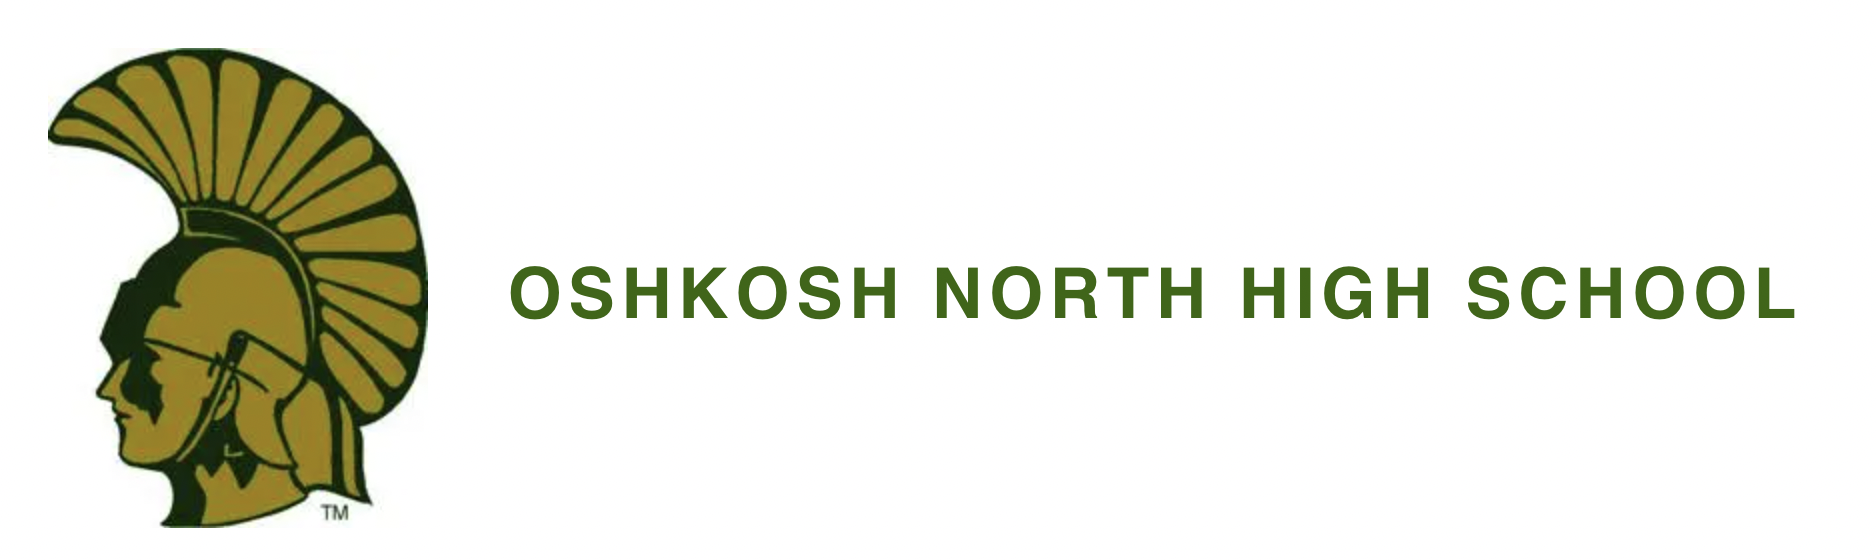 Oshkosh North High School